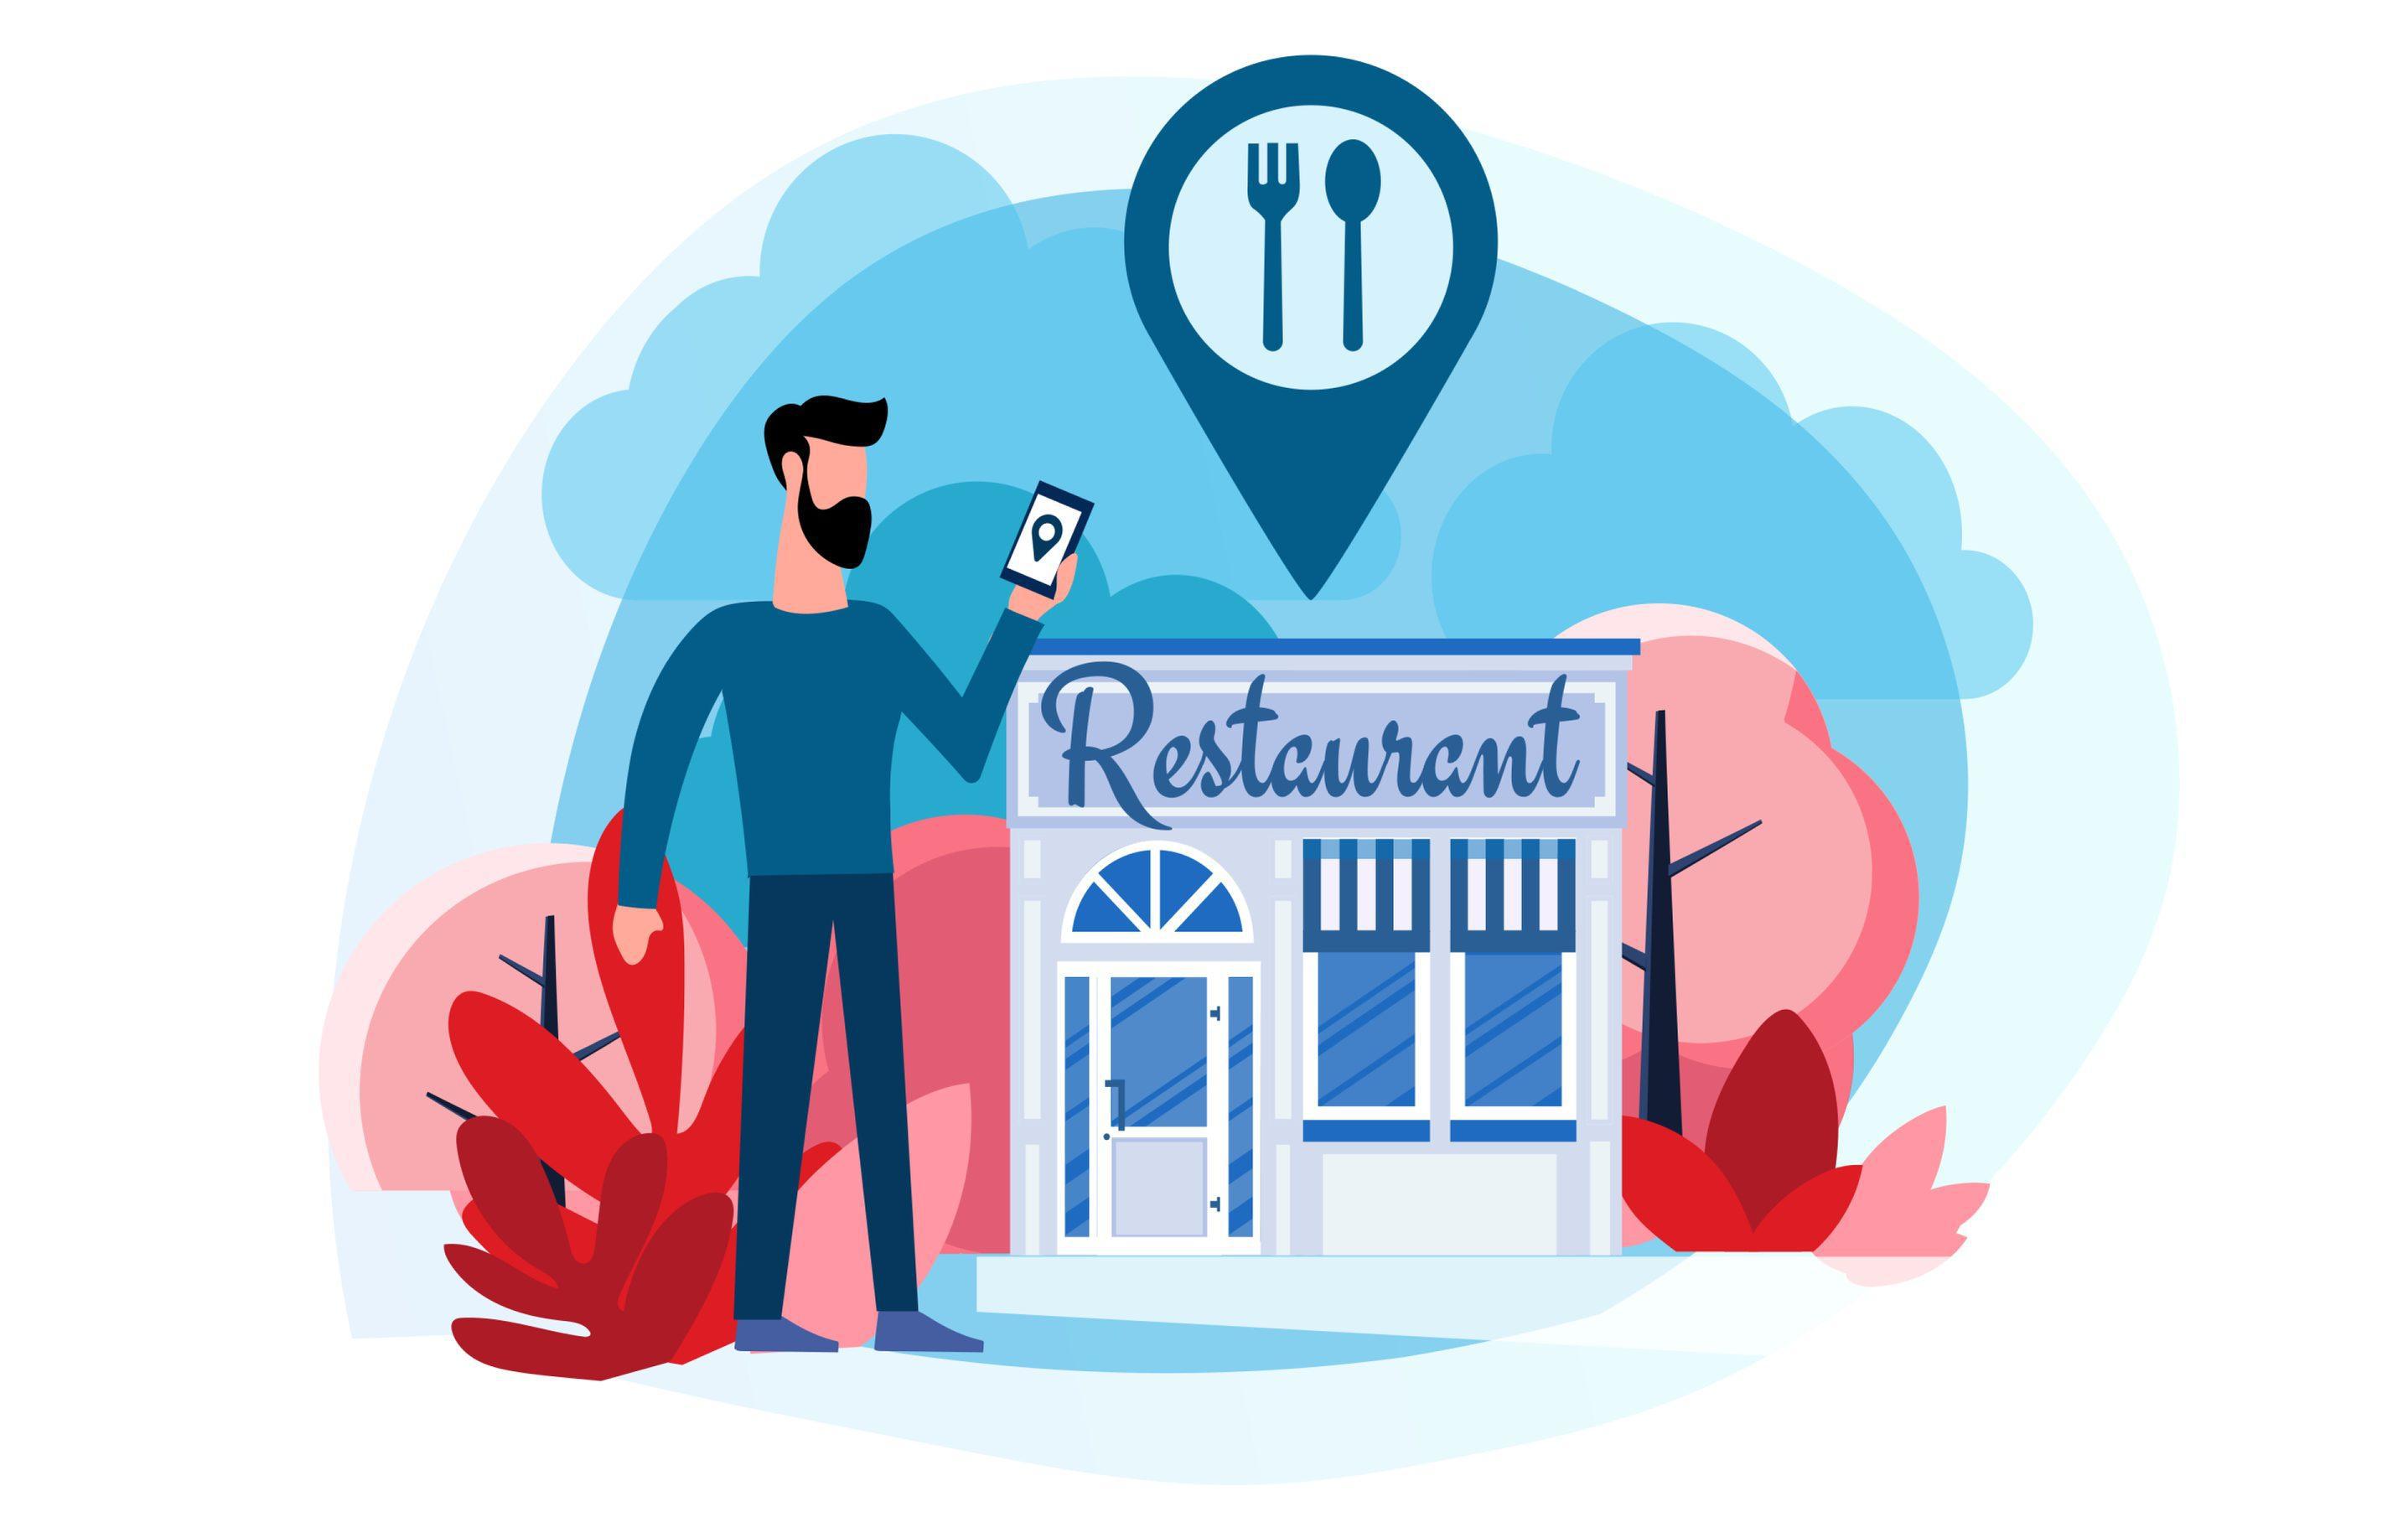 How to Create a Restaurant Website